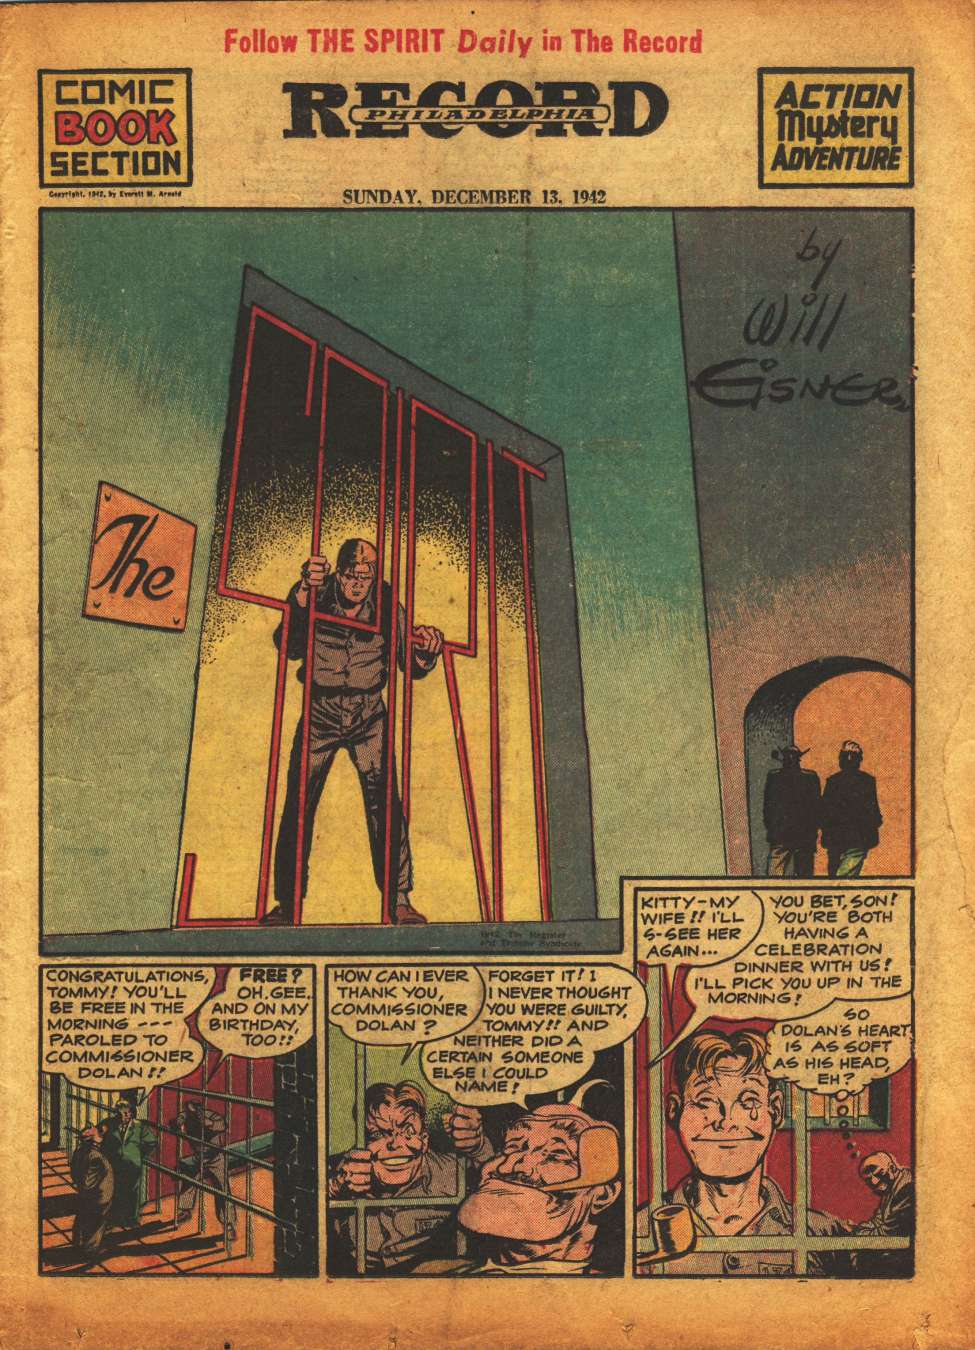 Comic Book Cover For The Spirit (1942-12-13) - Philadelphia Record